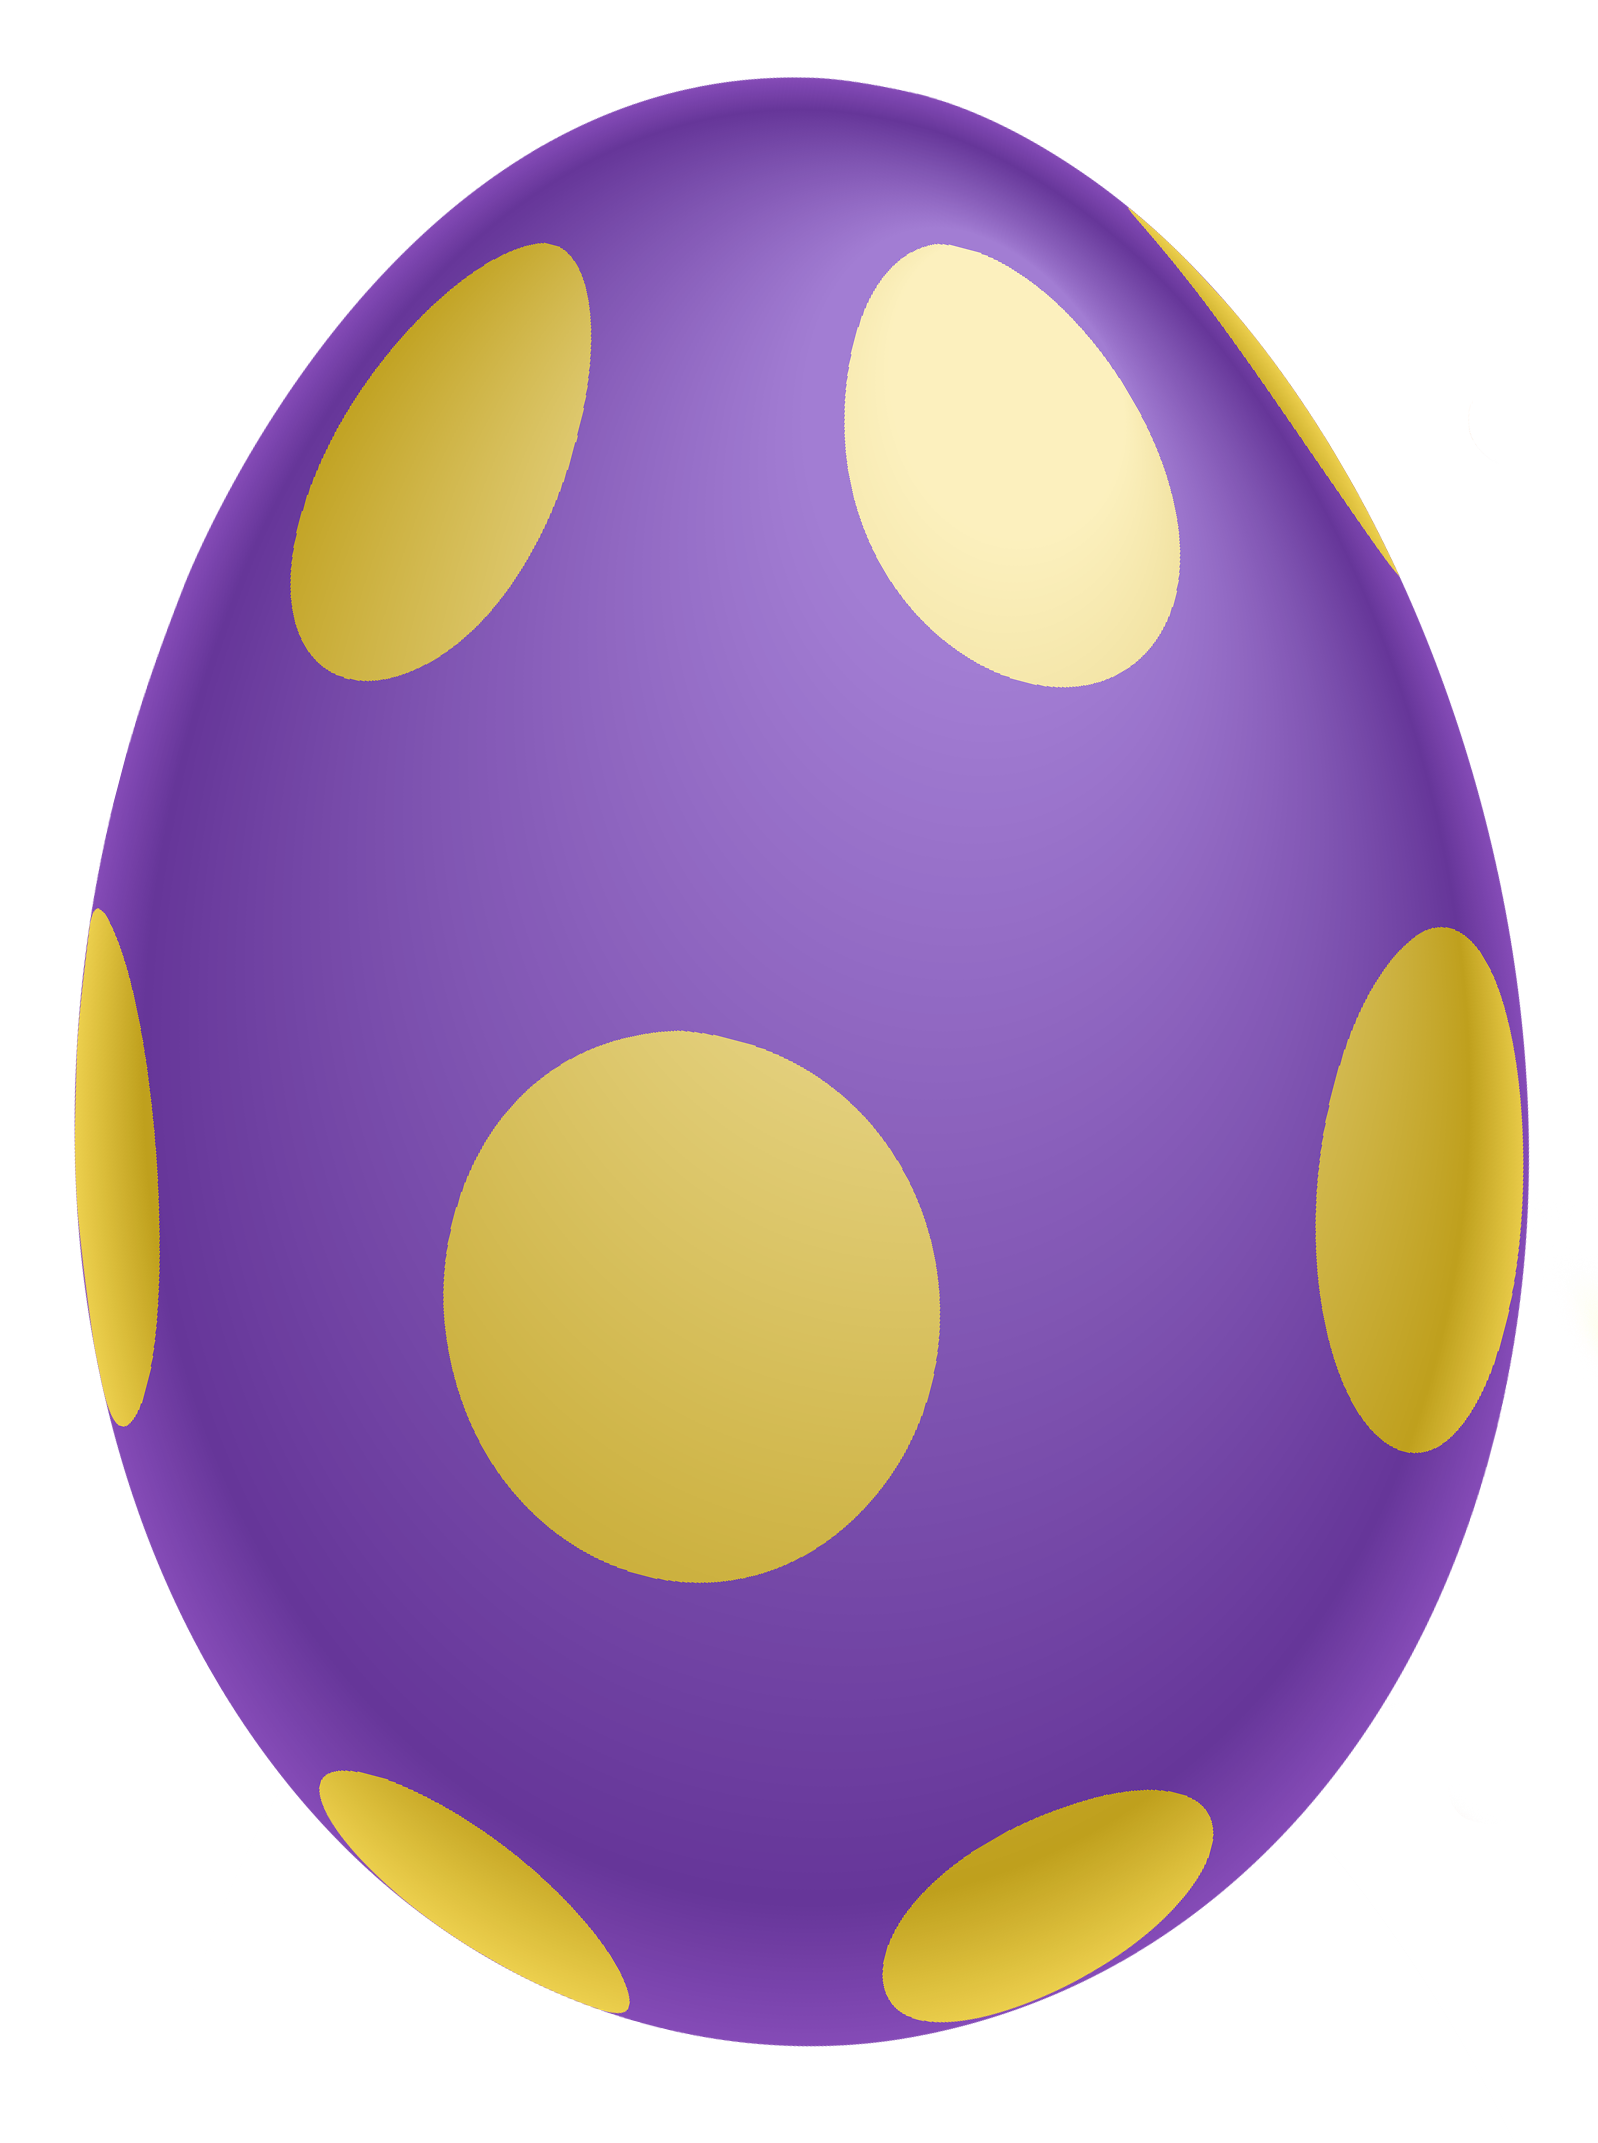 Easter Egg clipart. Free download transparent .PNG